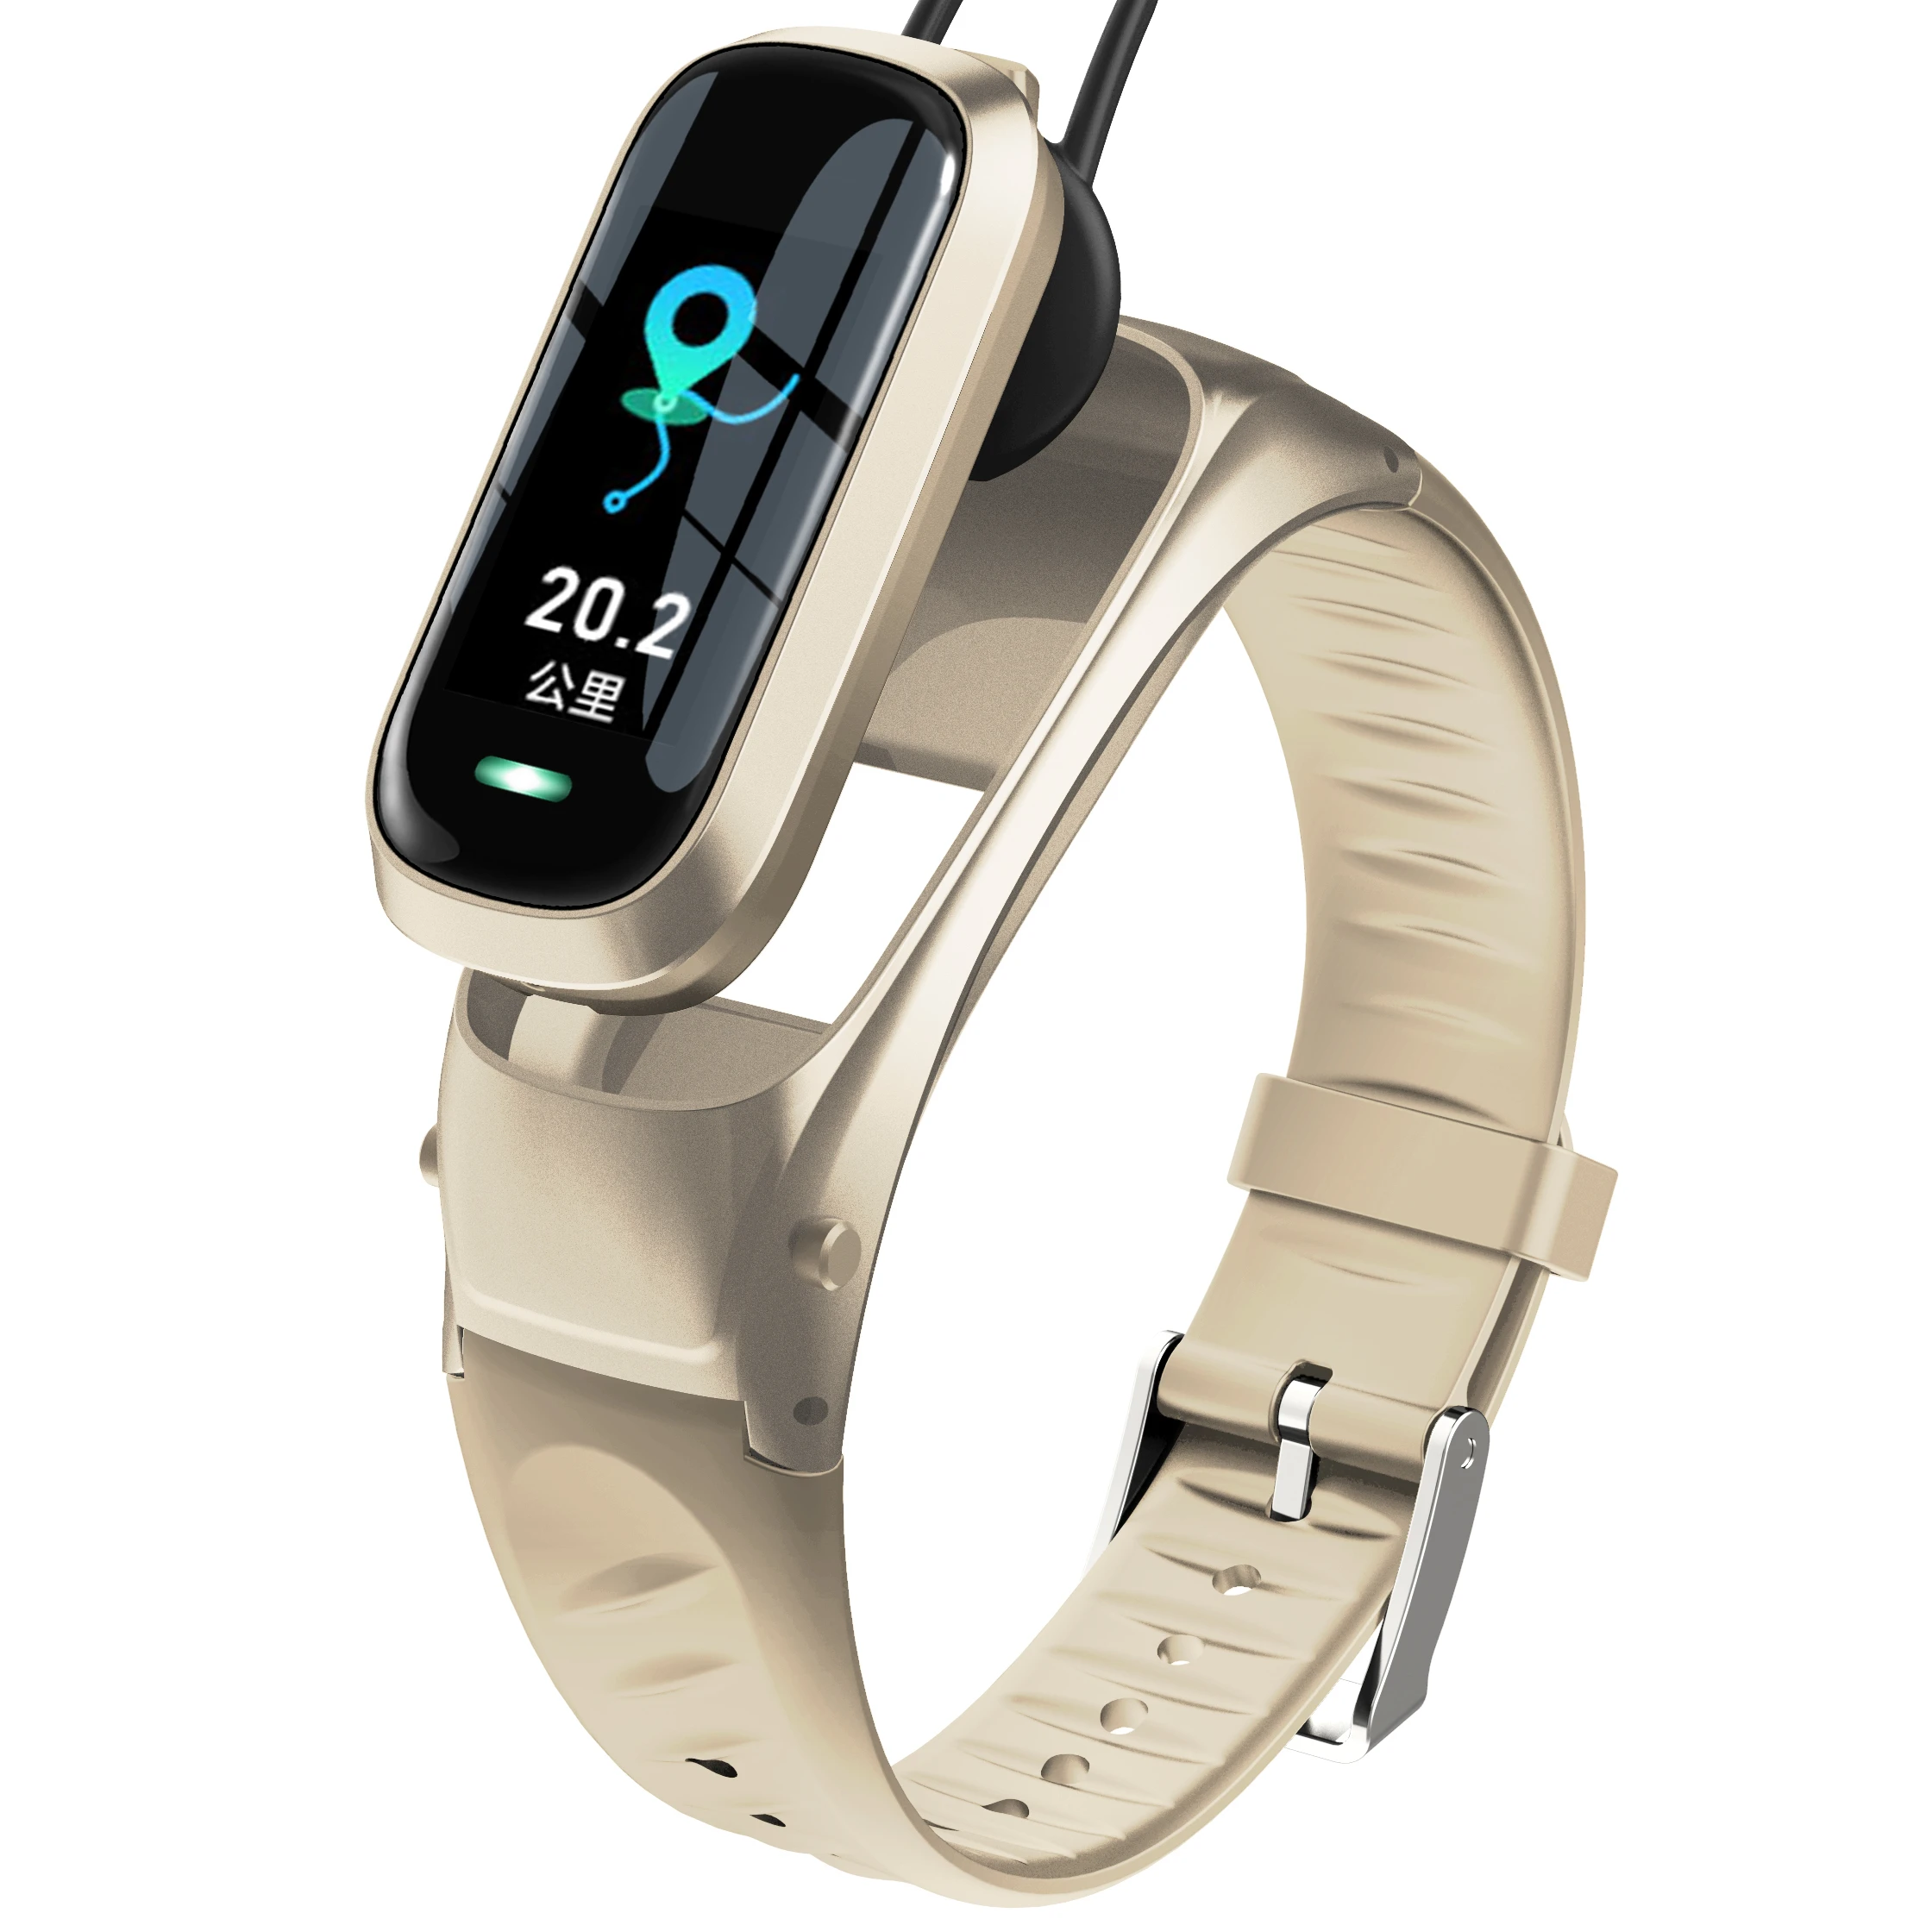 

Universal through technology smart watch earphone B6 smartwatch NFC waterproof 5.0 low power consumption